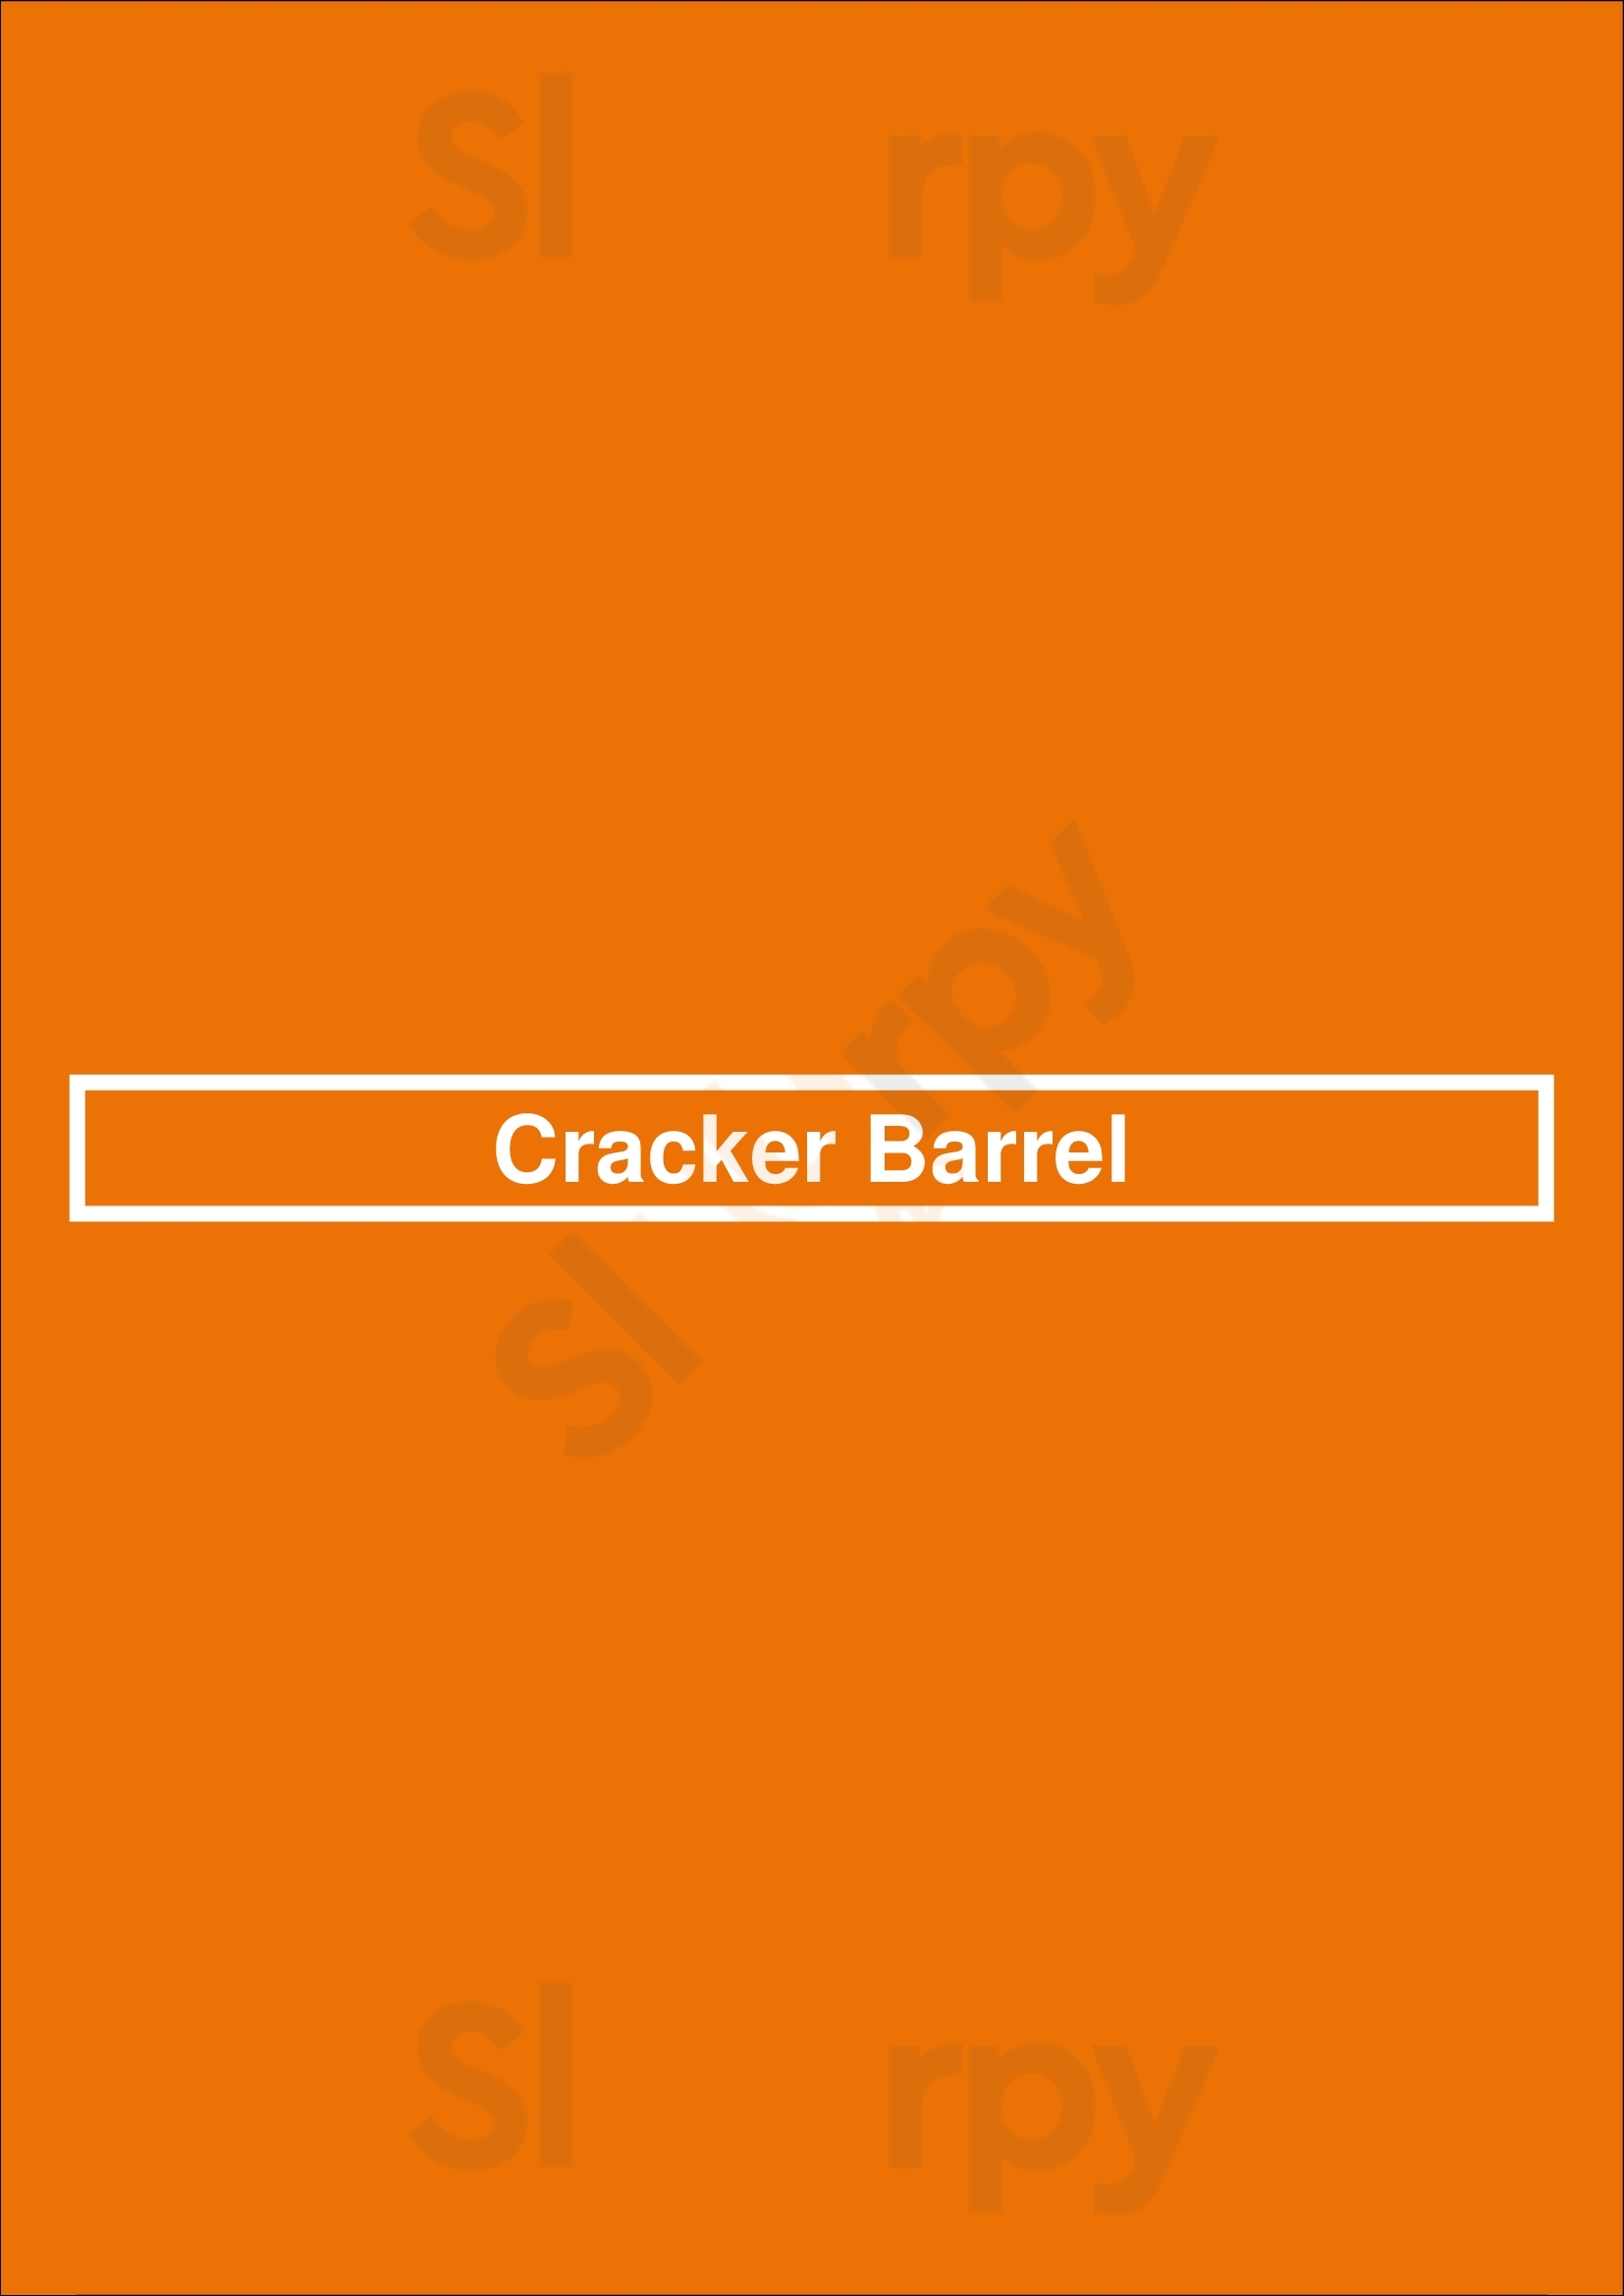 Cracker Barrel Rochester Menu - 1